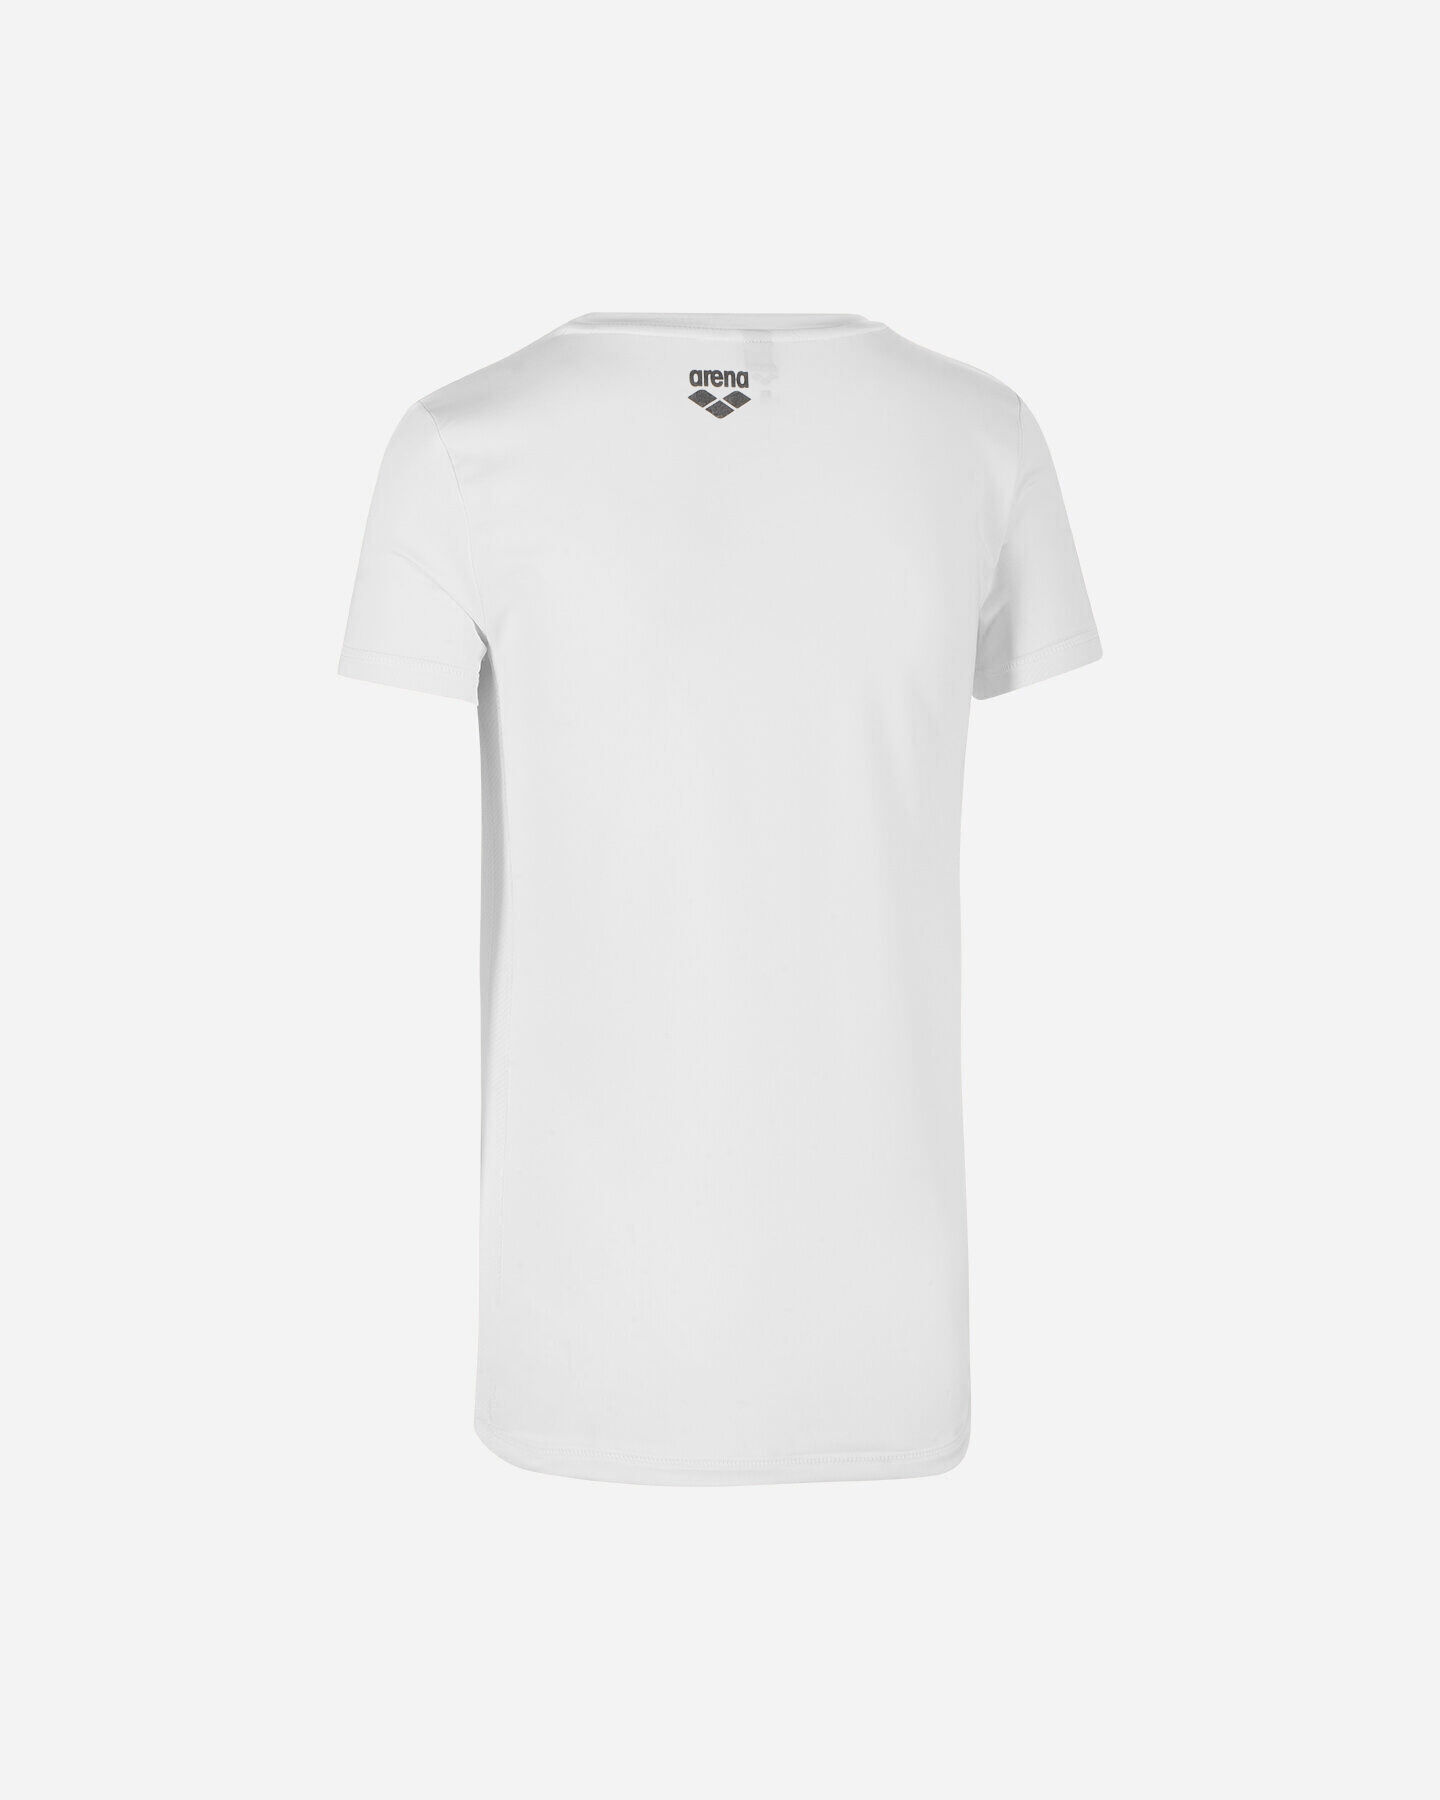  T-Shirt ARENA ATHLETICS W S4075052|001|XS scatto 1